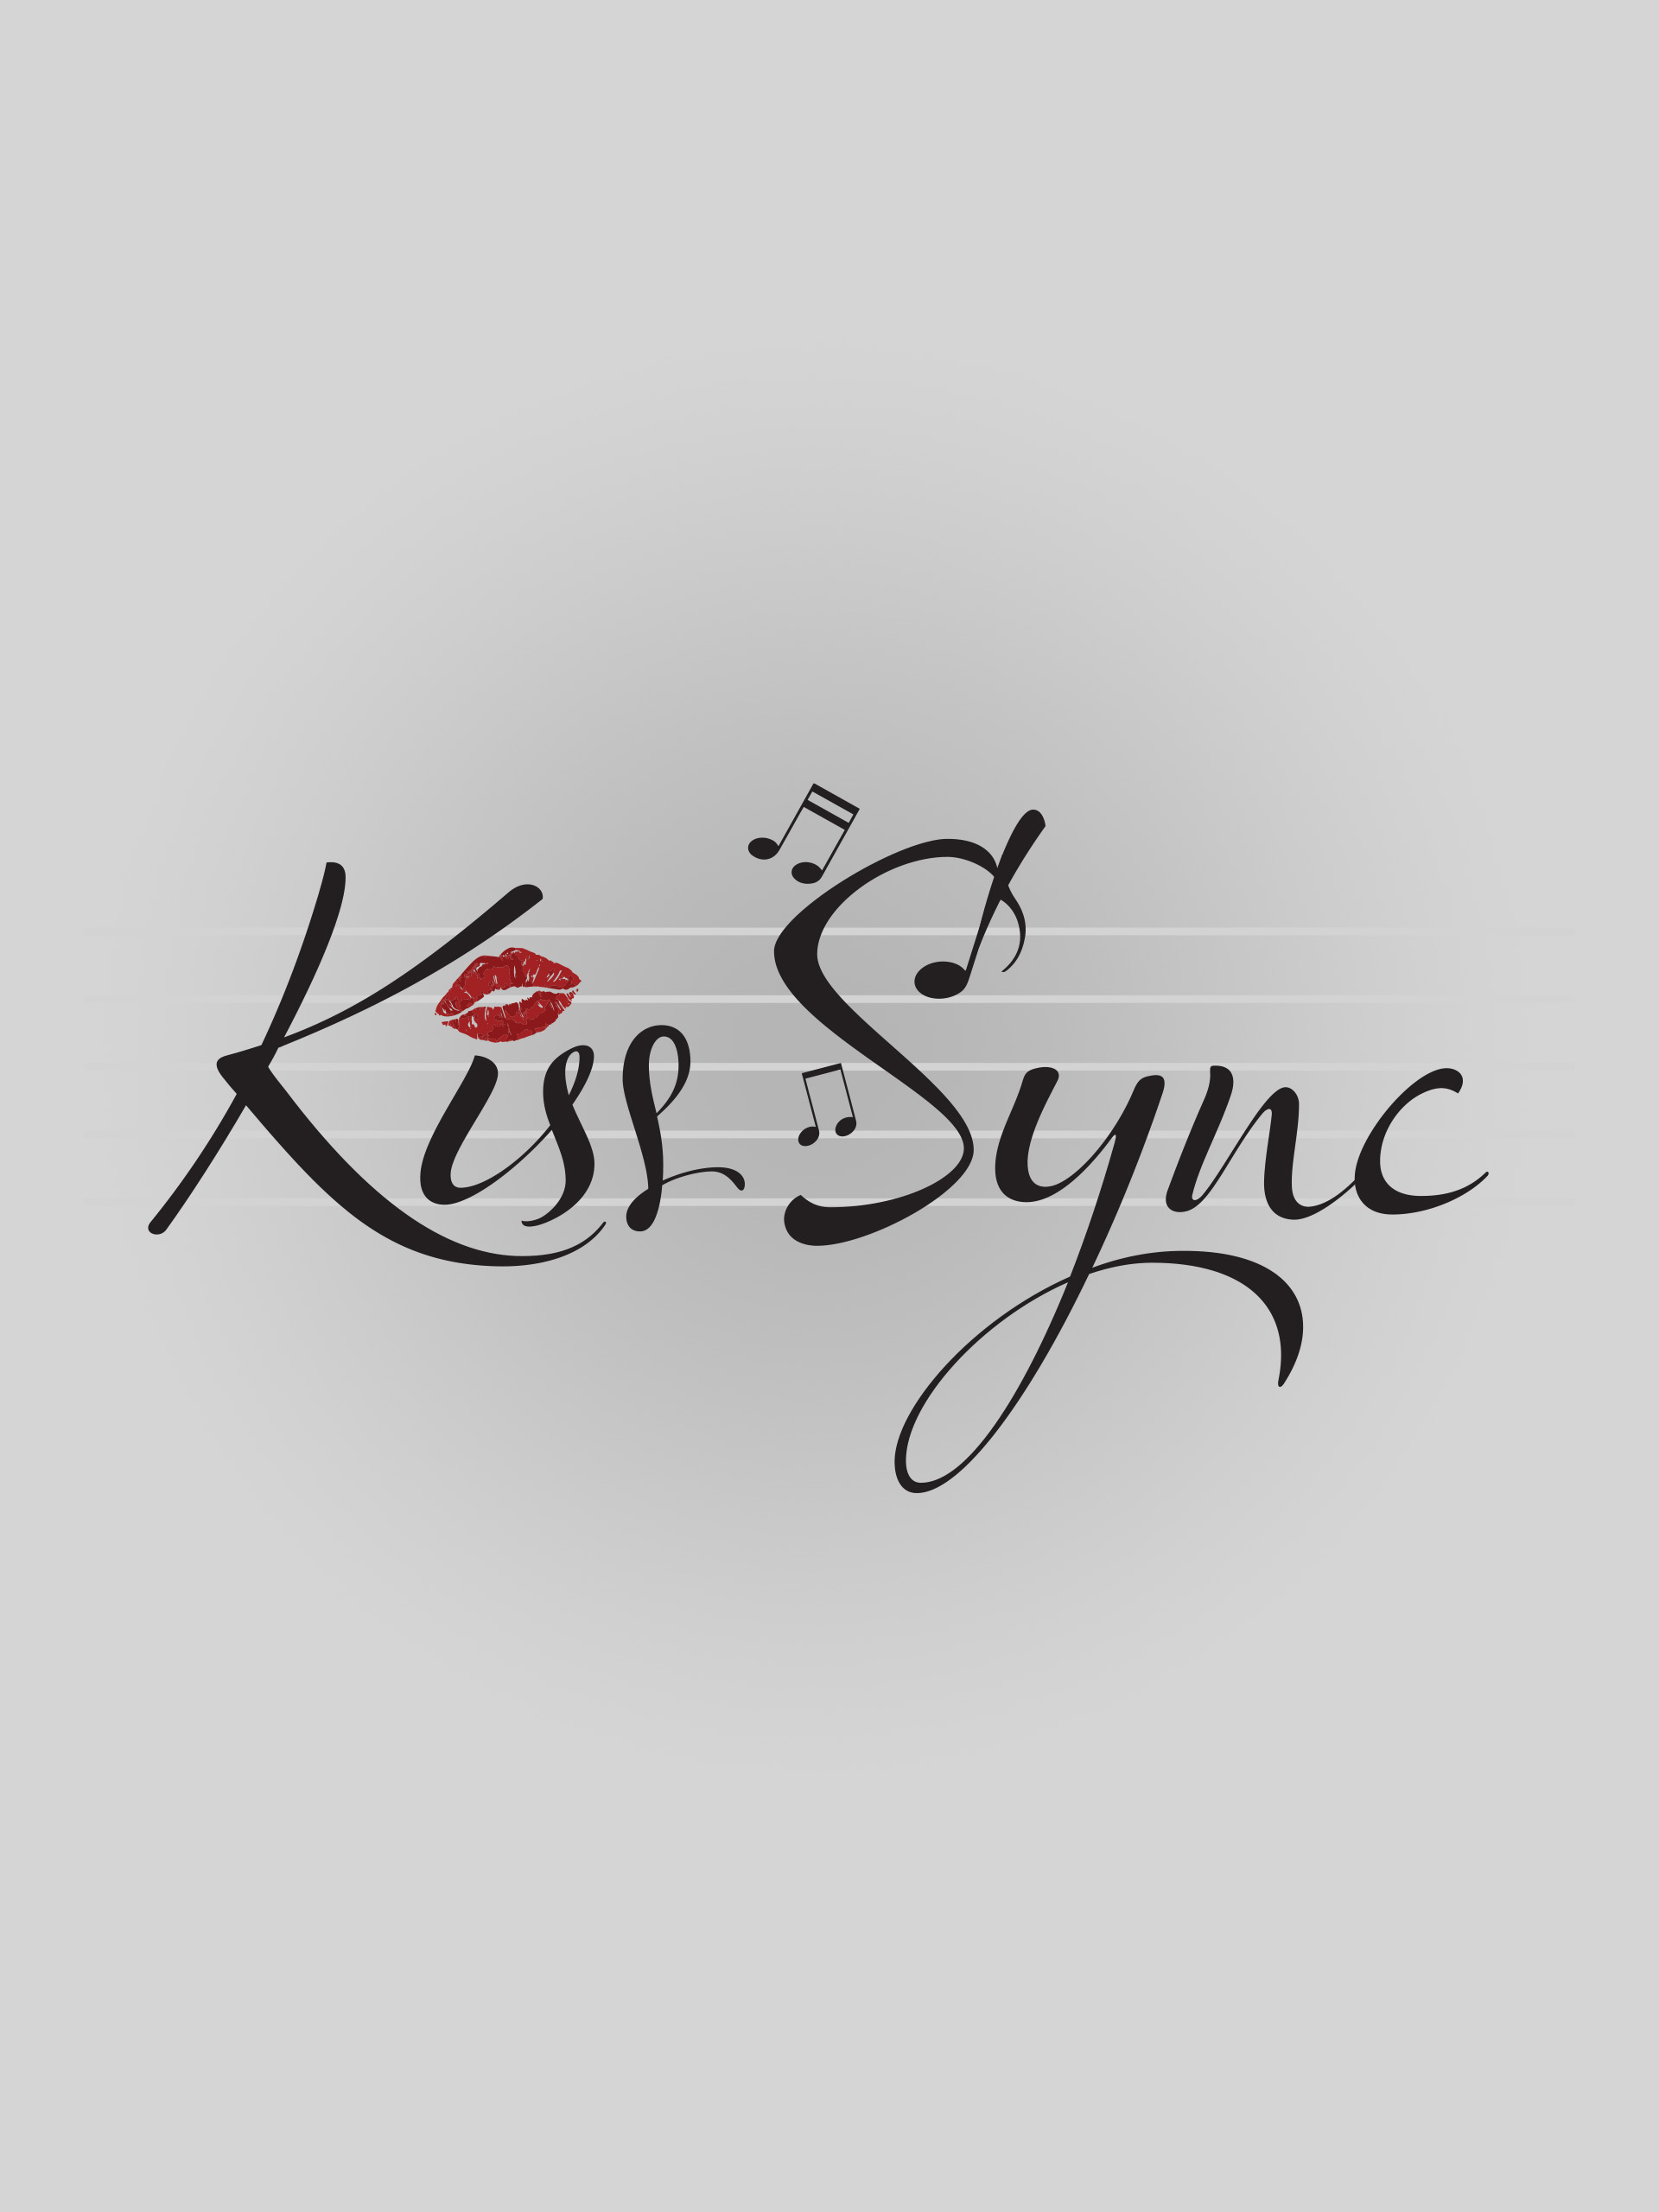 KissSync - A kiss and a song